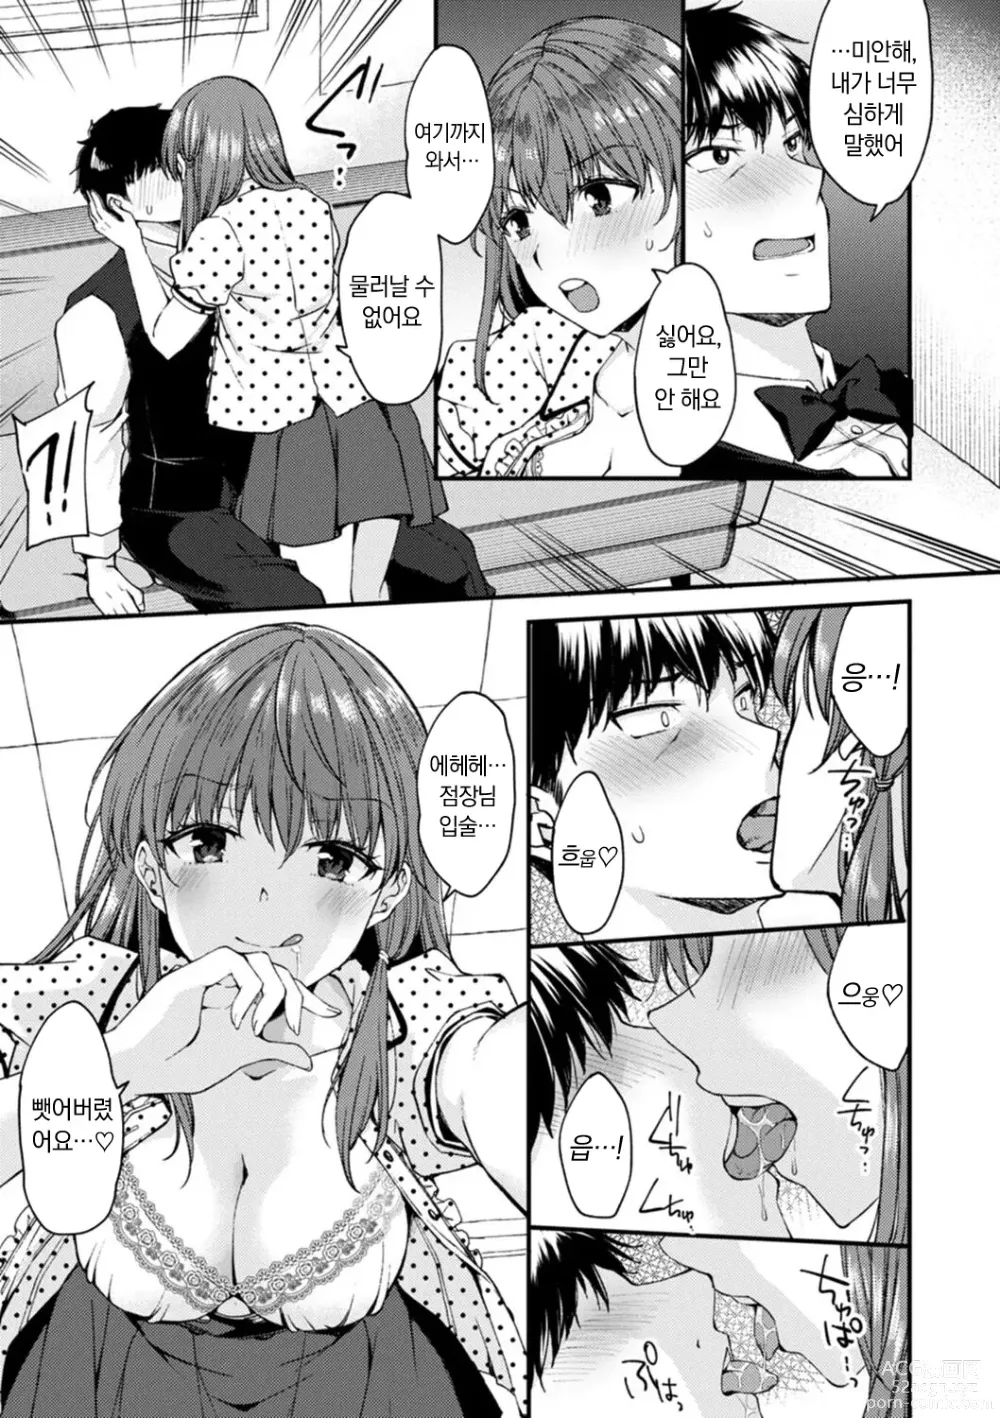 Page 27 of manga 취미가 바니걸이라니 정말이에요?